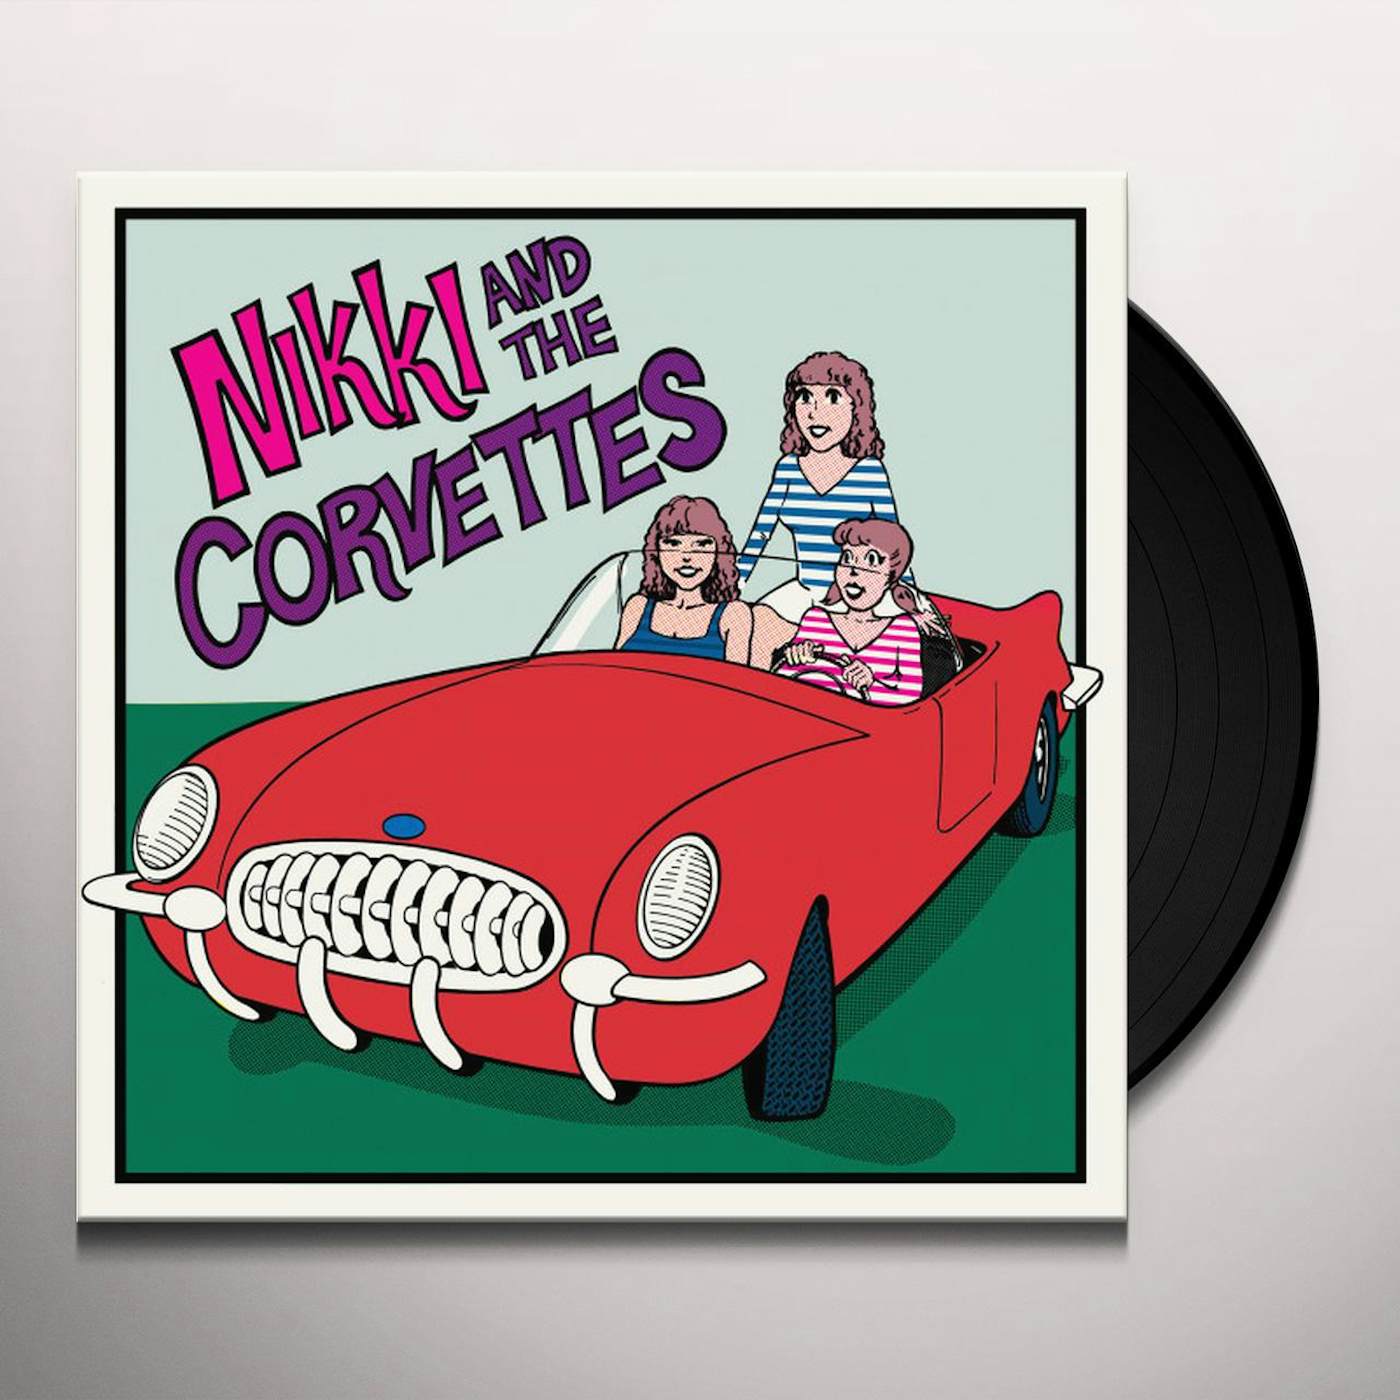 NIKKI & THE CORVETTES Vinyl Record